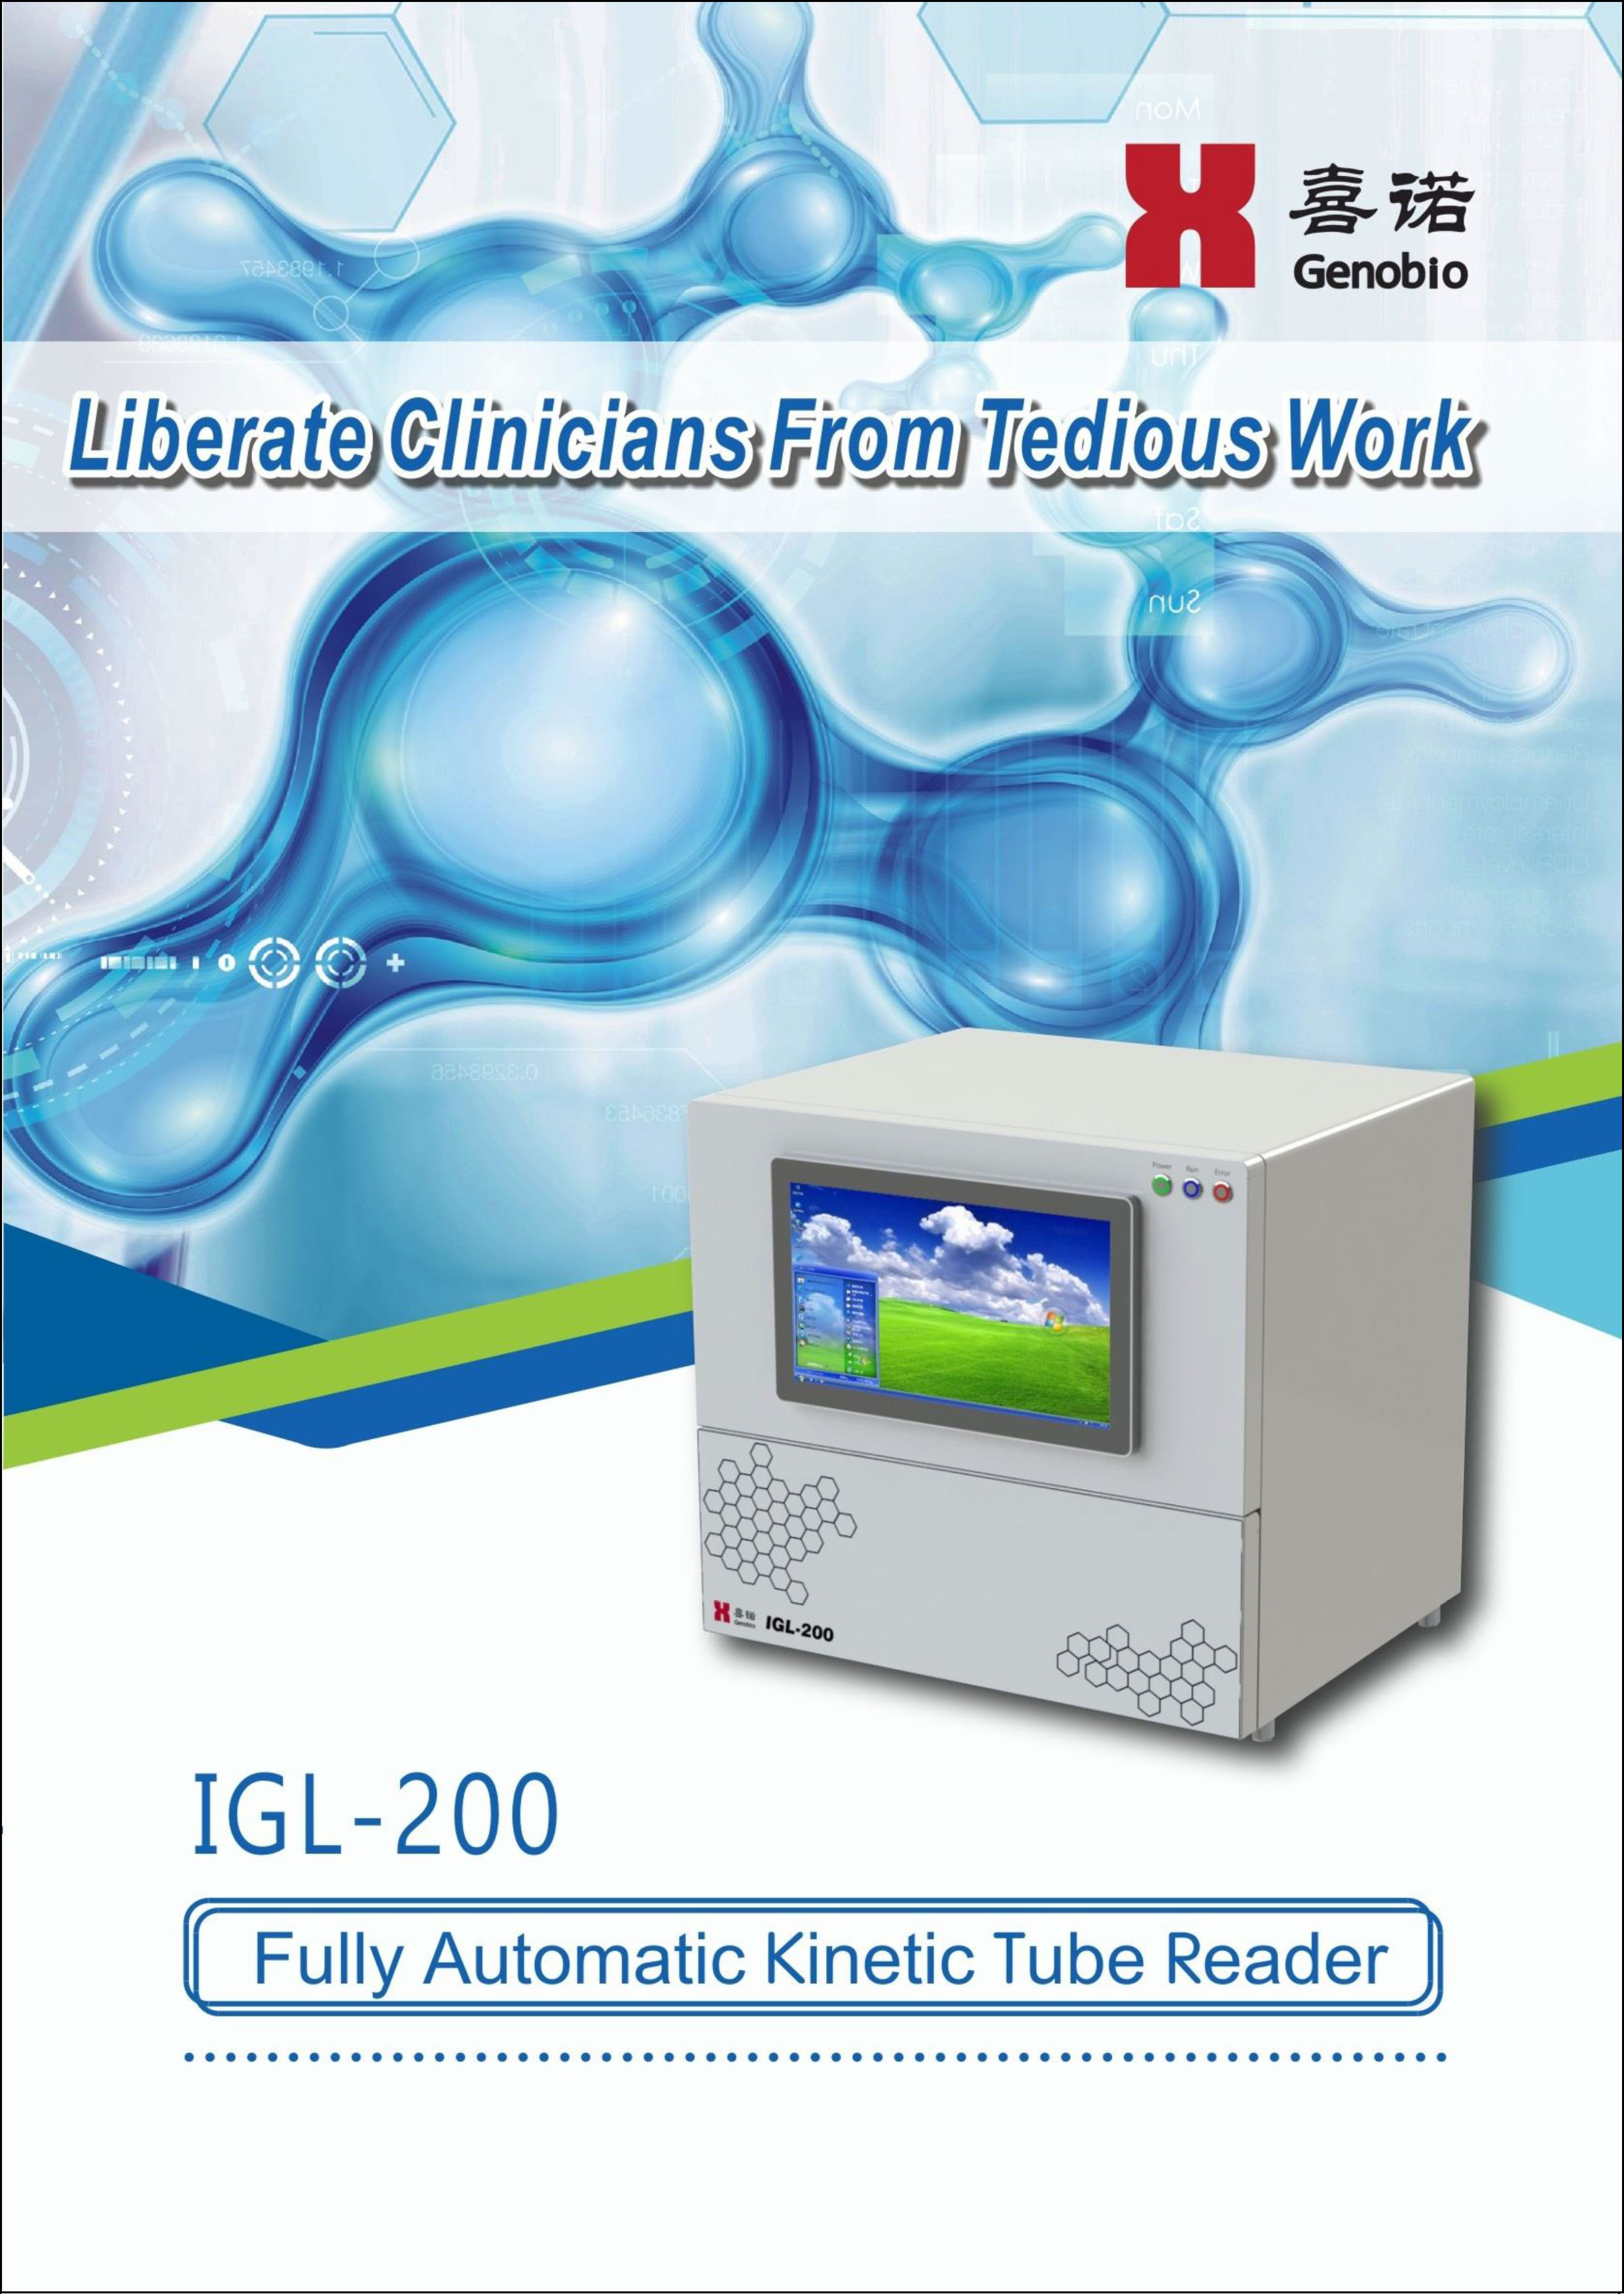 IGL-200: Fully Automatic Kinetic Tube Reader